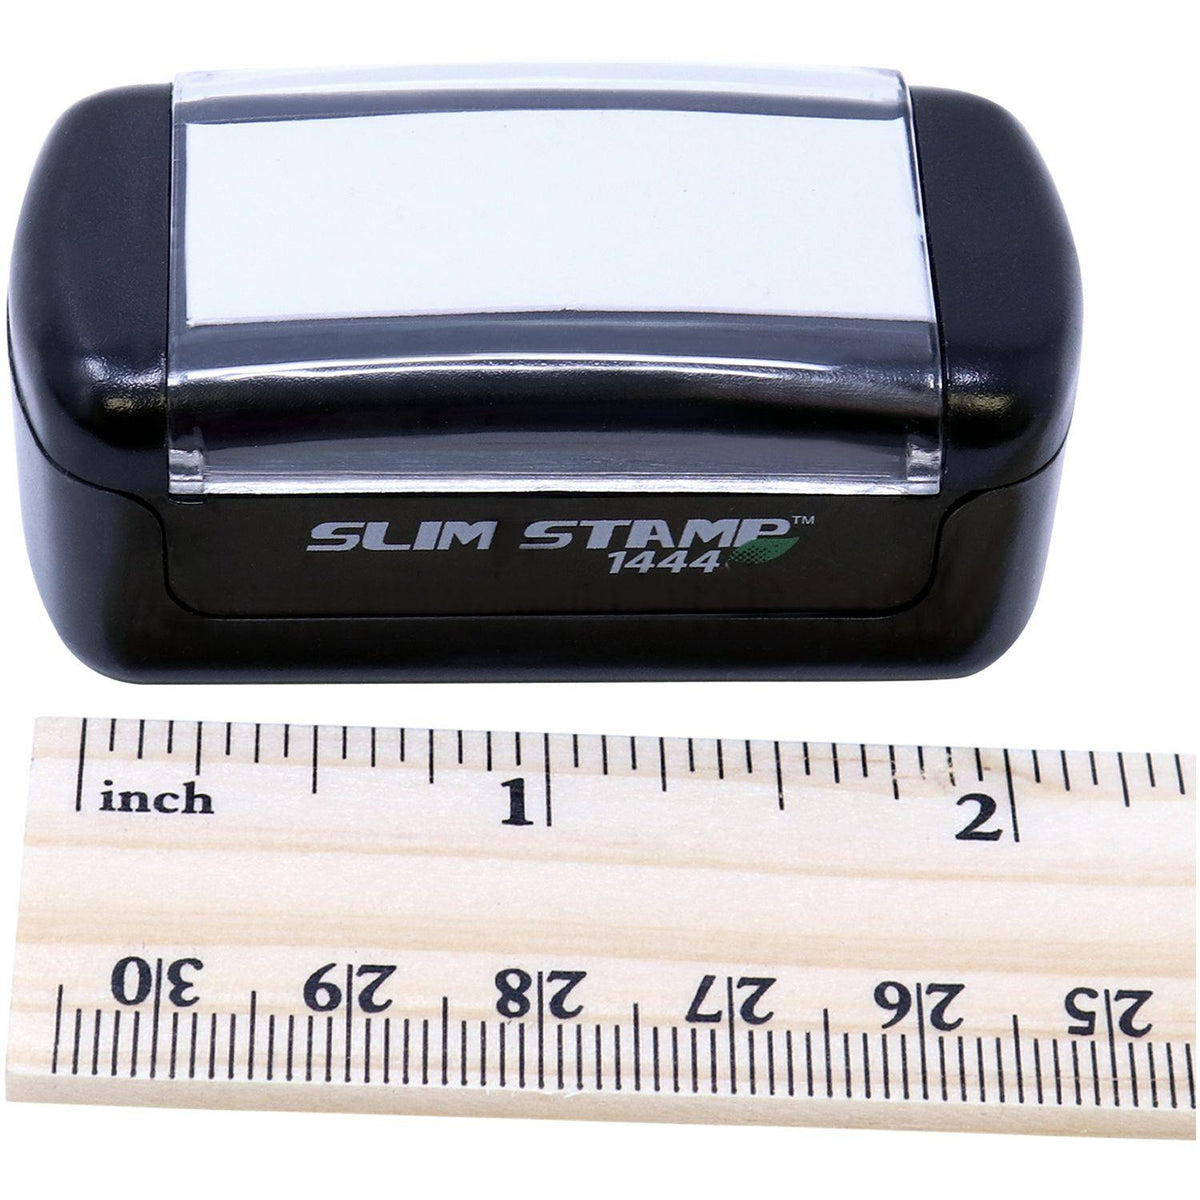 Measurement Slim Pre Inked Pkg Of Stamp with Ruler